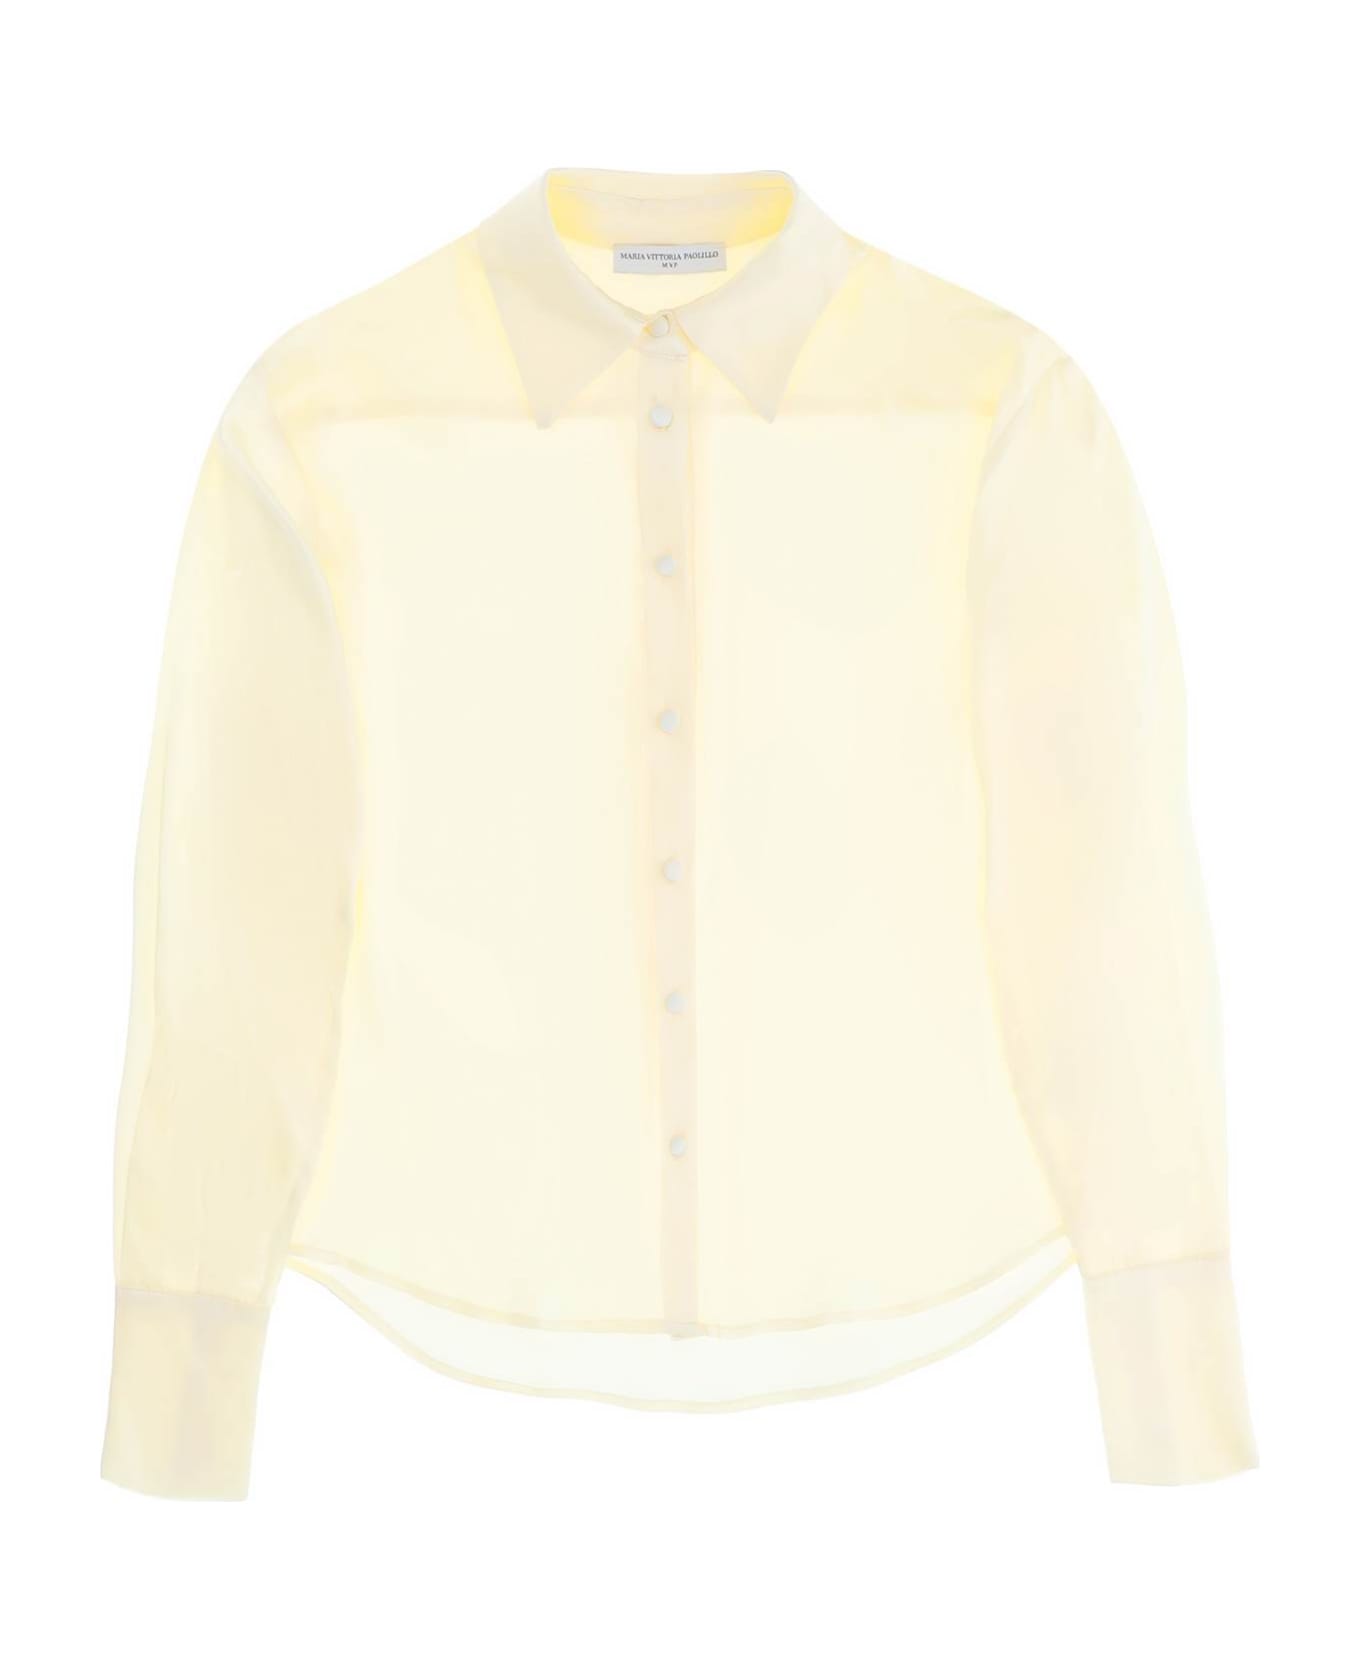 MVP Wardrobe 'sunset Boulevard' Satin Shirt - CREMA (White) シャツ